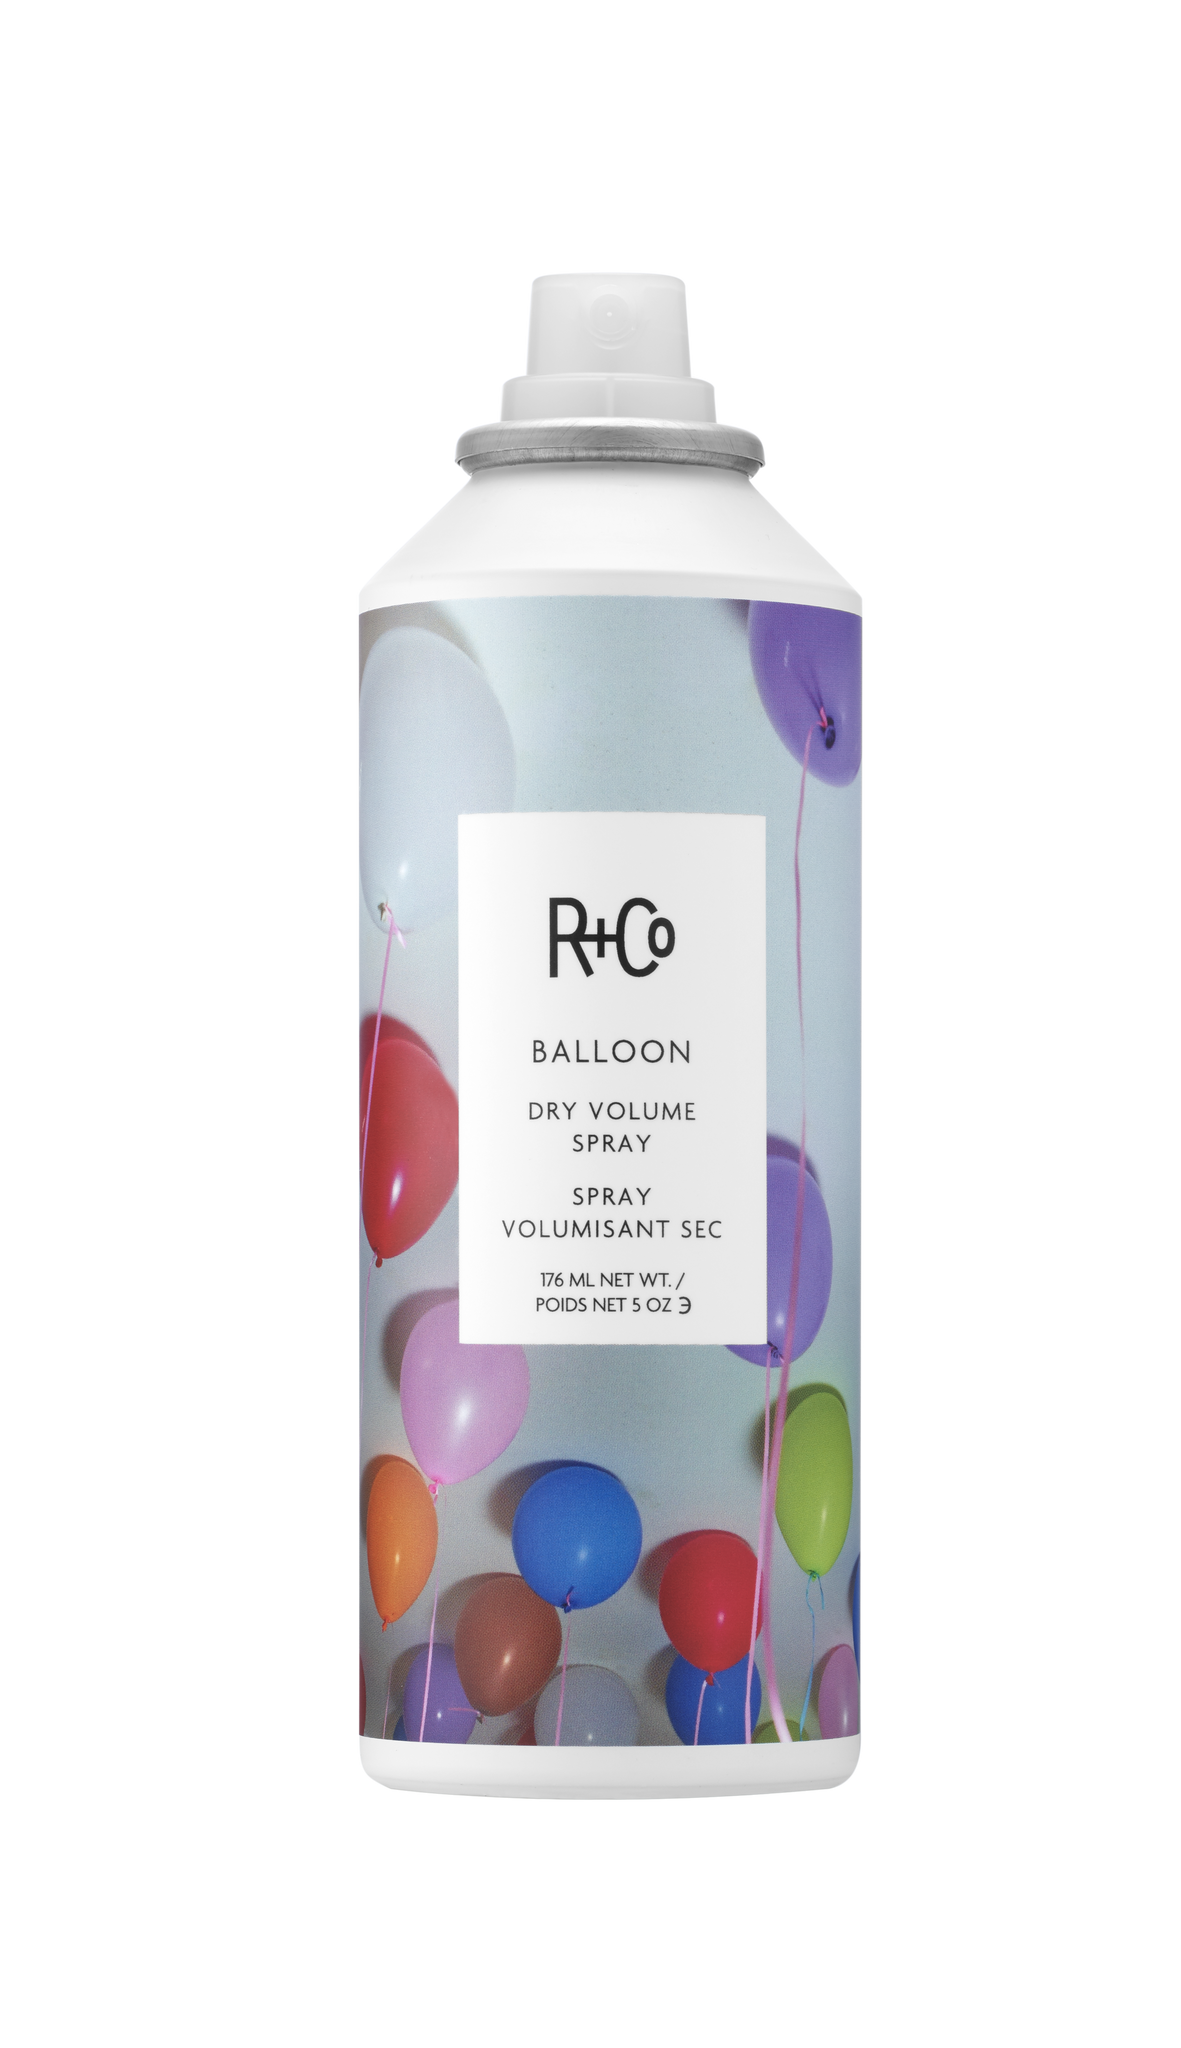 R+Co BALLOON / Dry Volume Spray 176ml